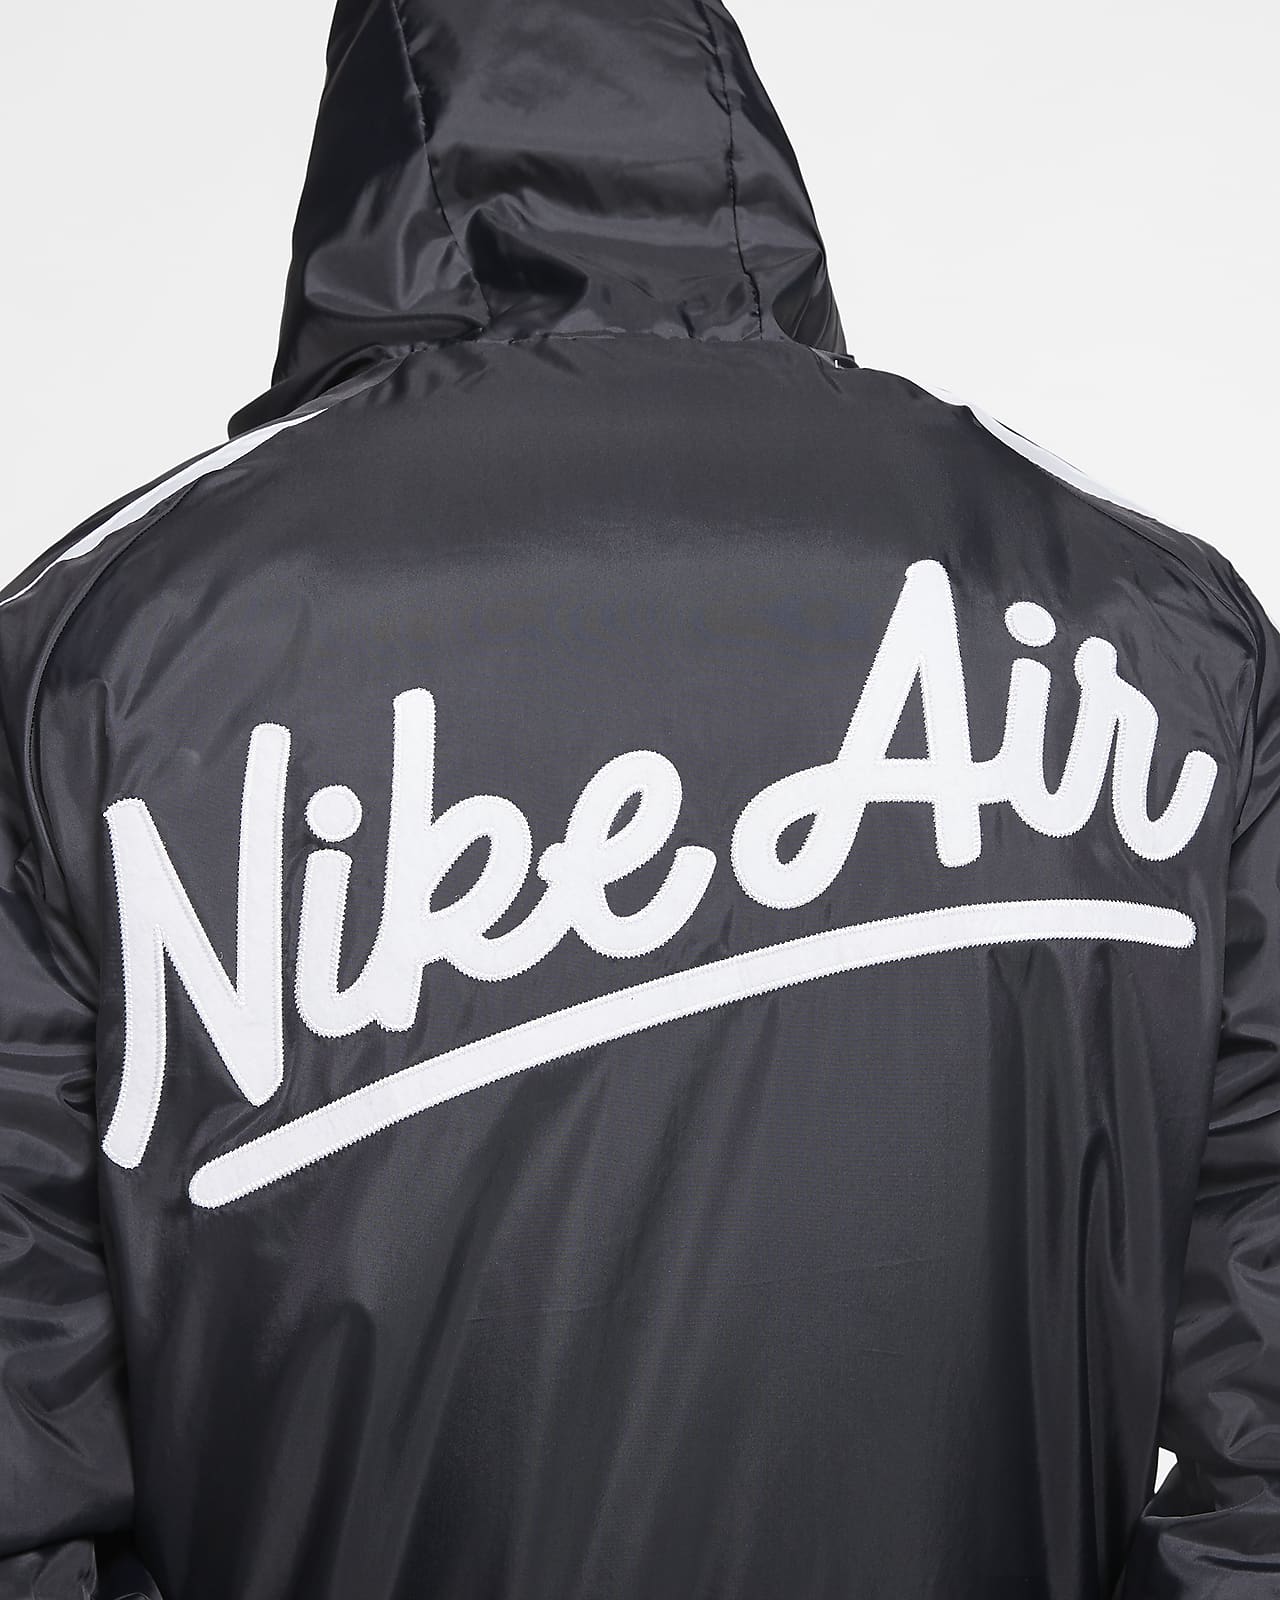 Nike Air Men's Woven Jacket